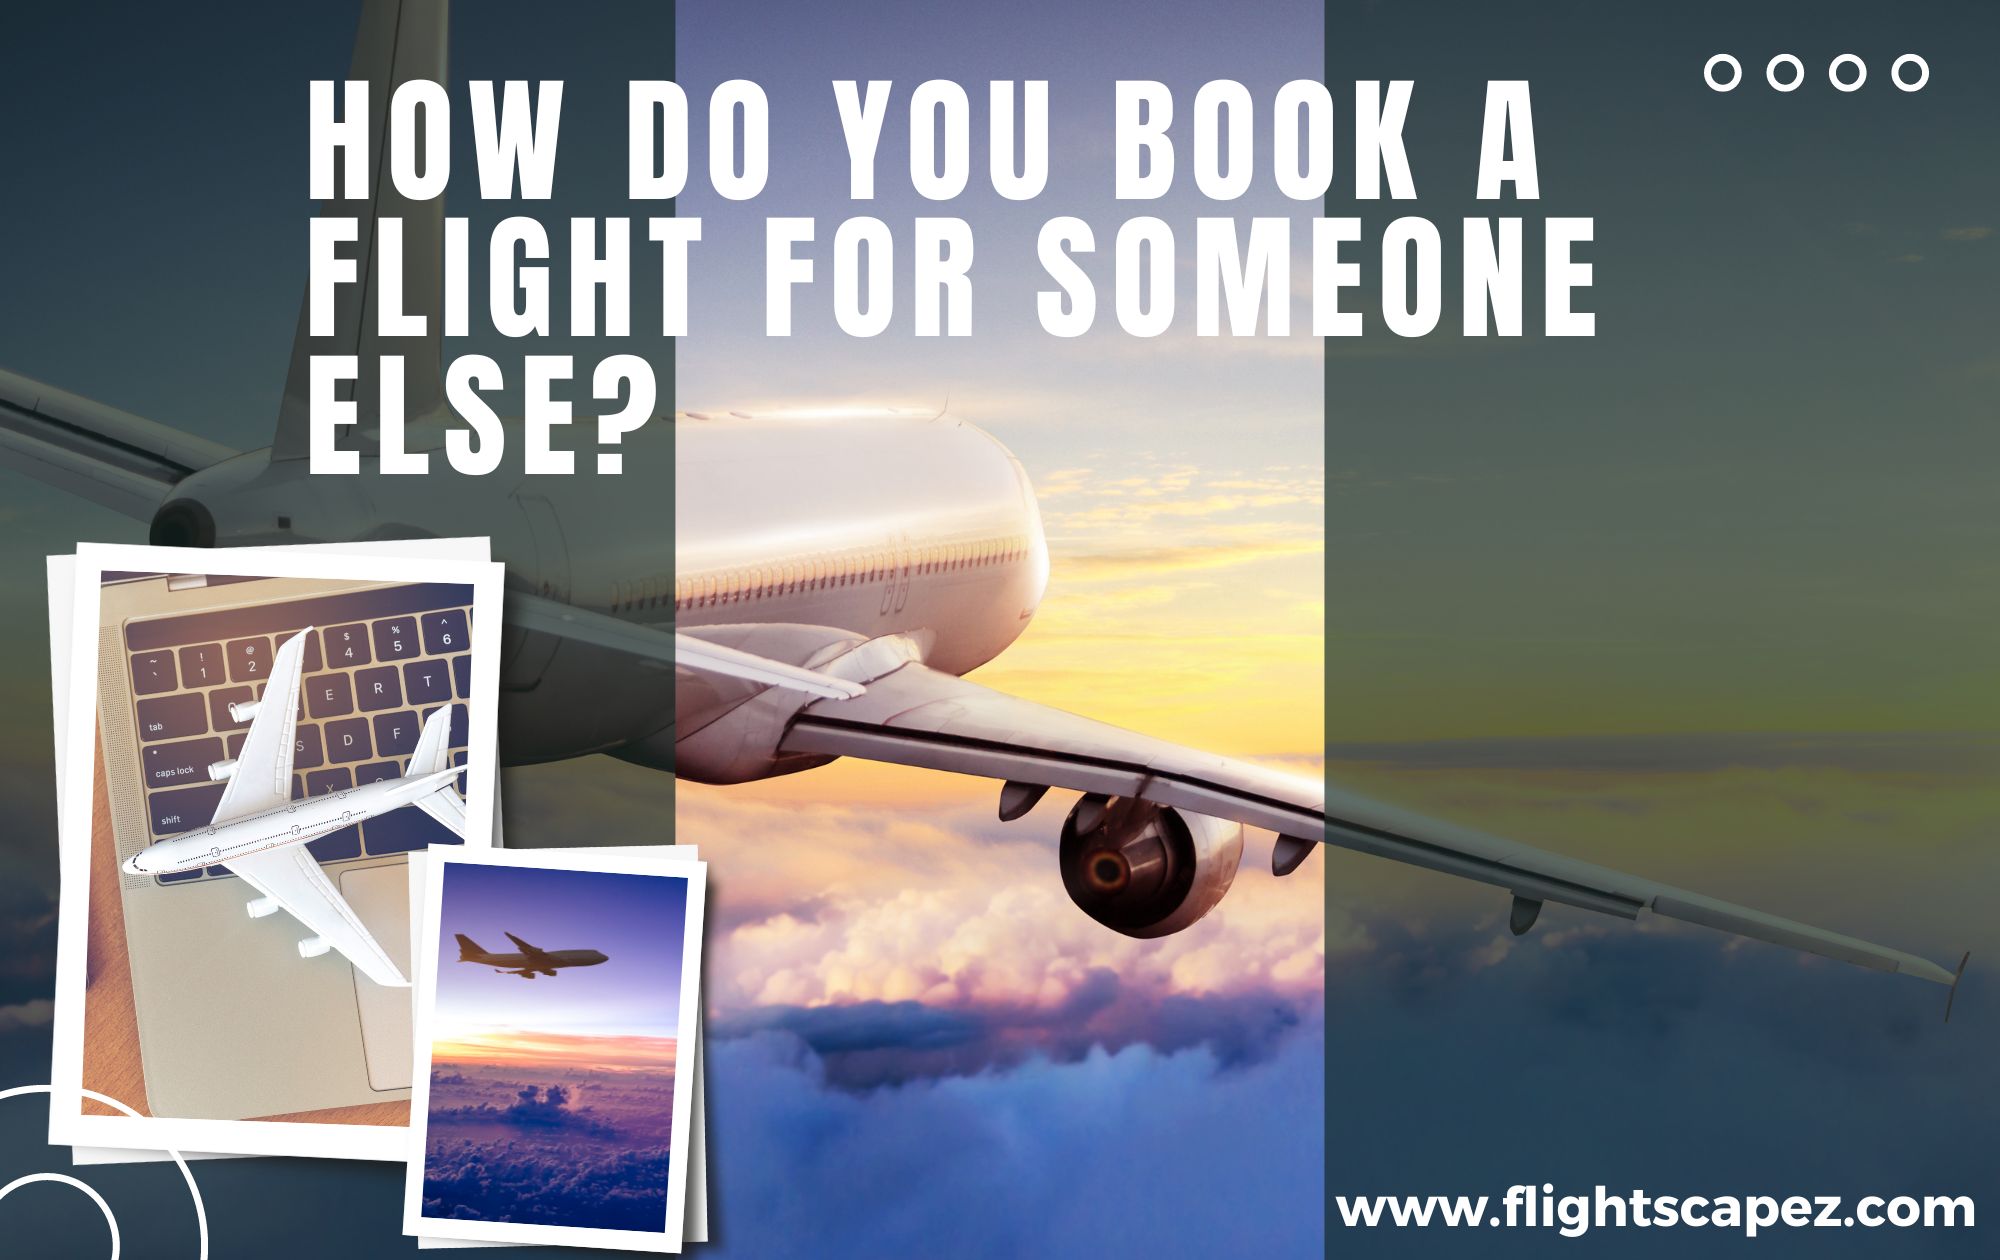 How do you book a flight for someone else